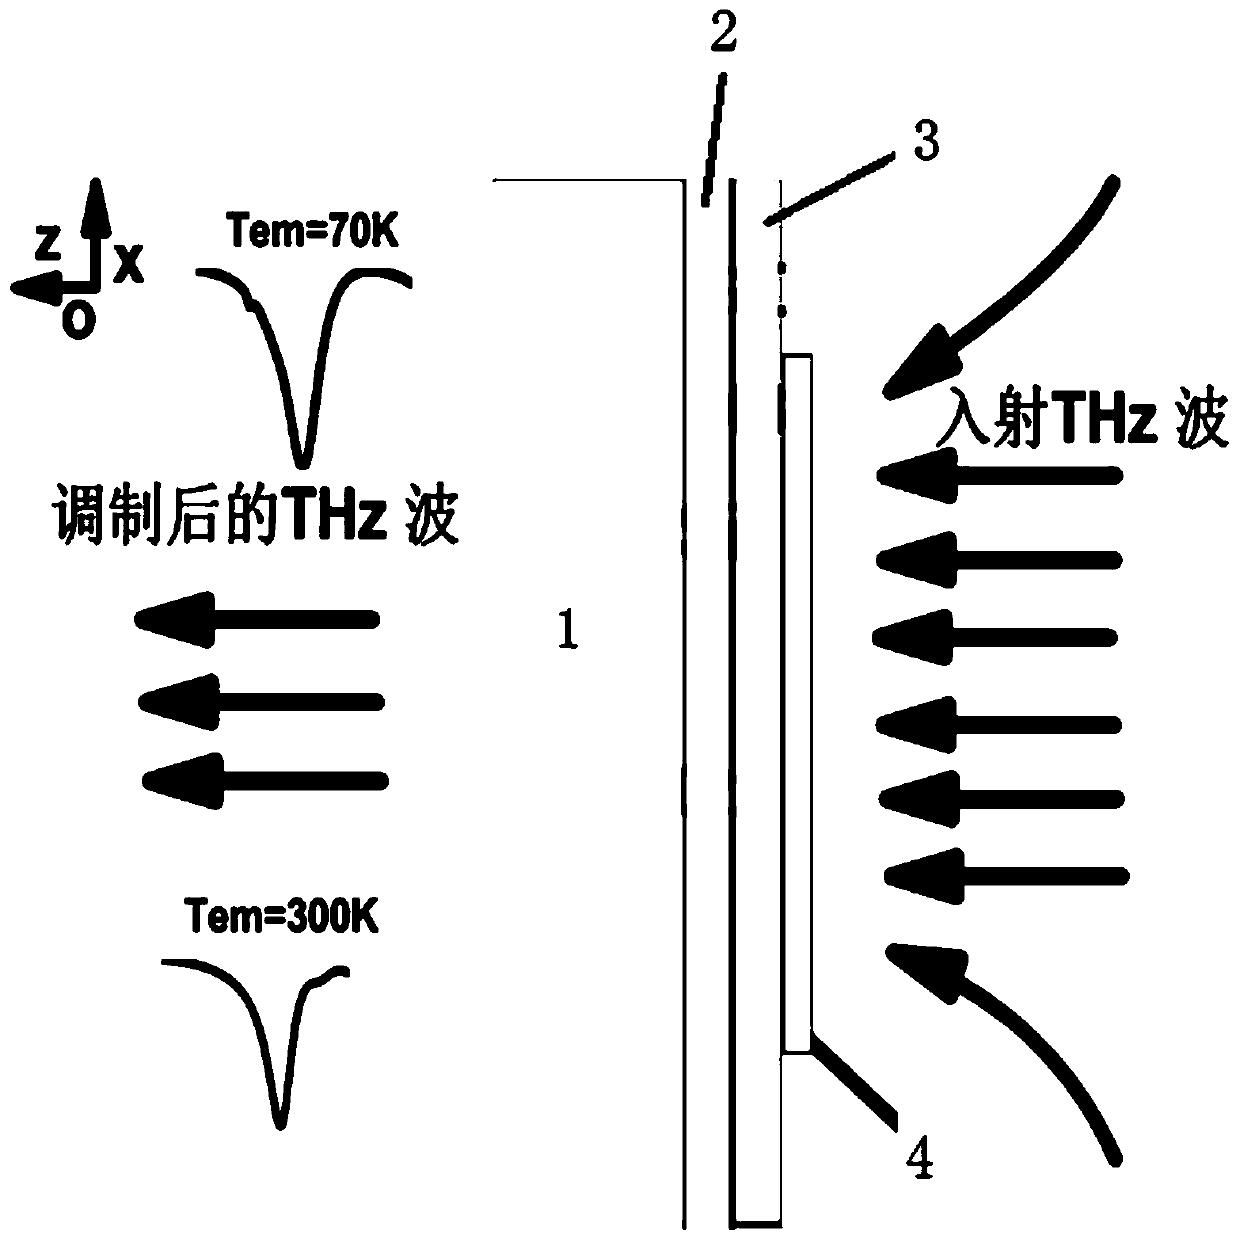 Terahertz wave modulator based on strontium titanate all-dielectric metamaterial and preparation method of terahertz wave modulator